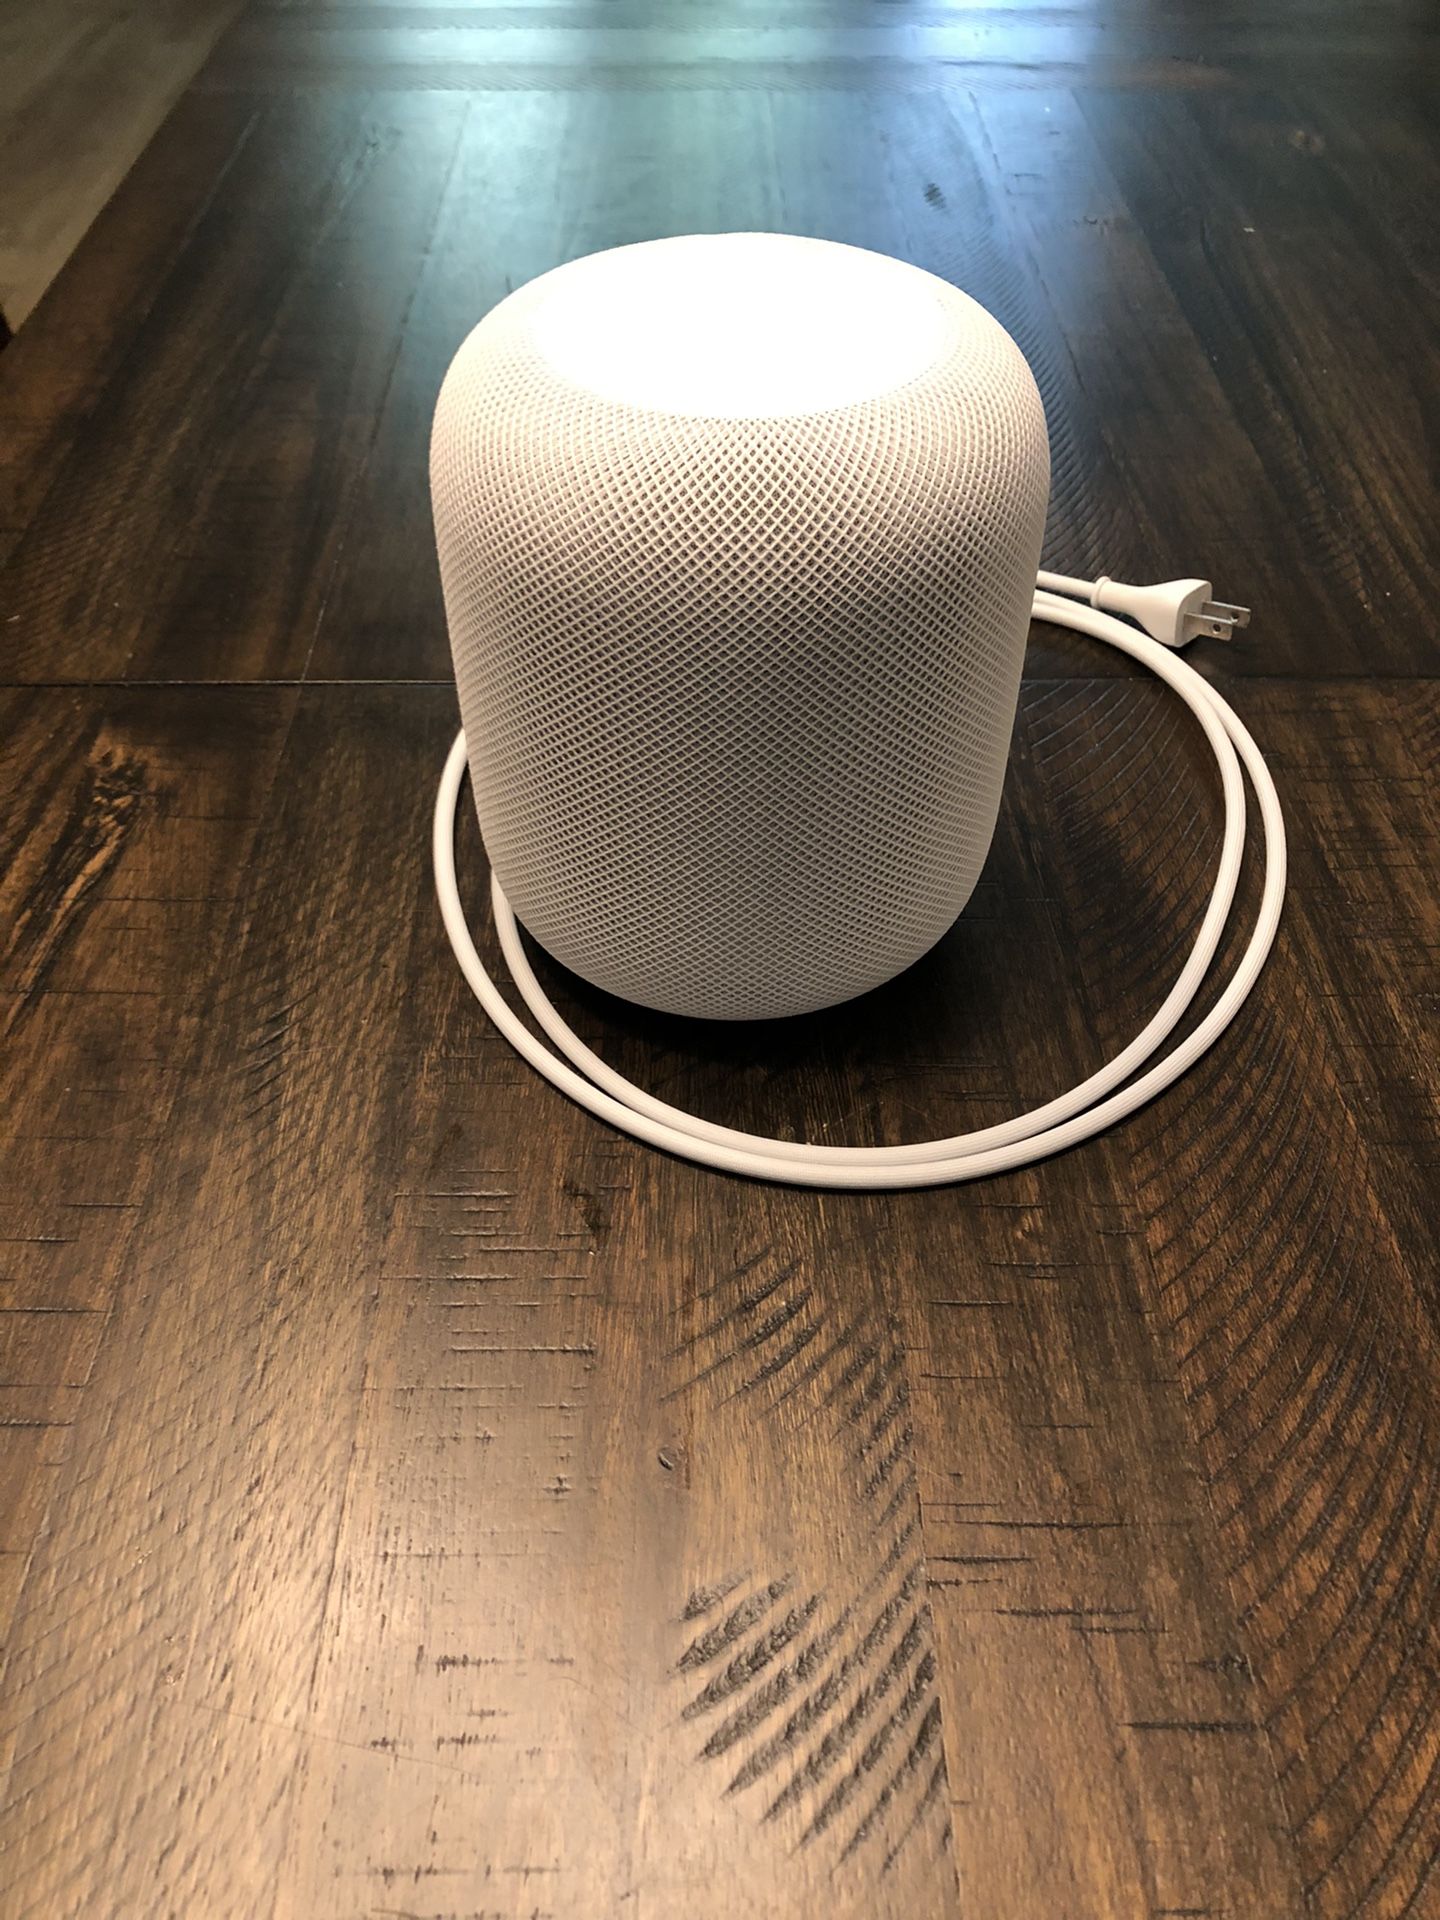 Apple HomePod (white)